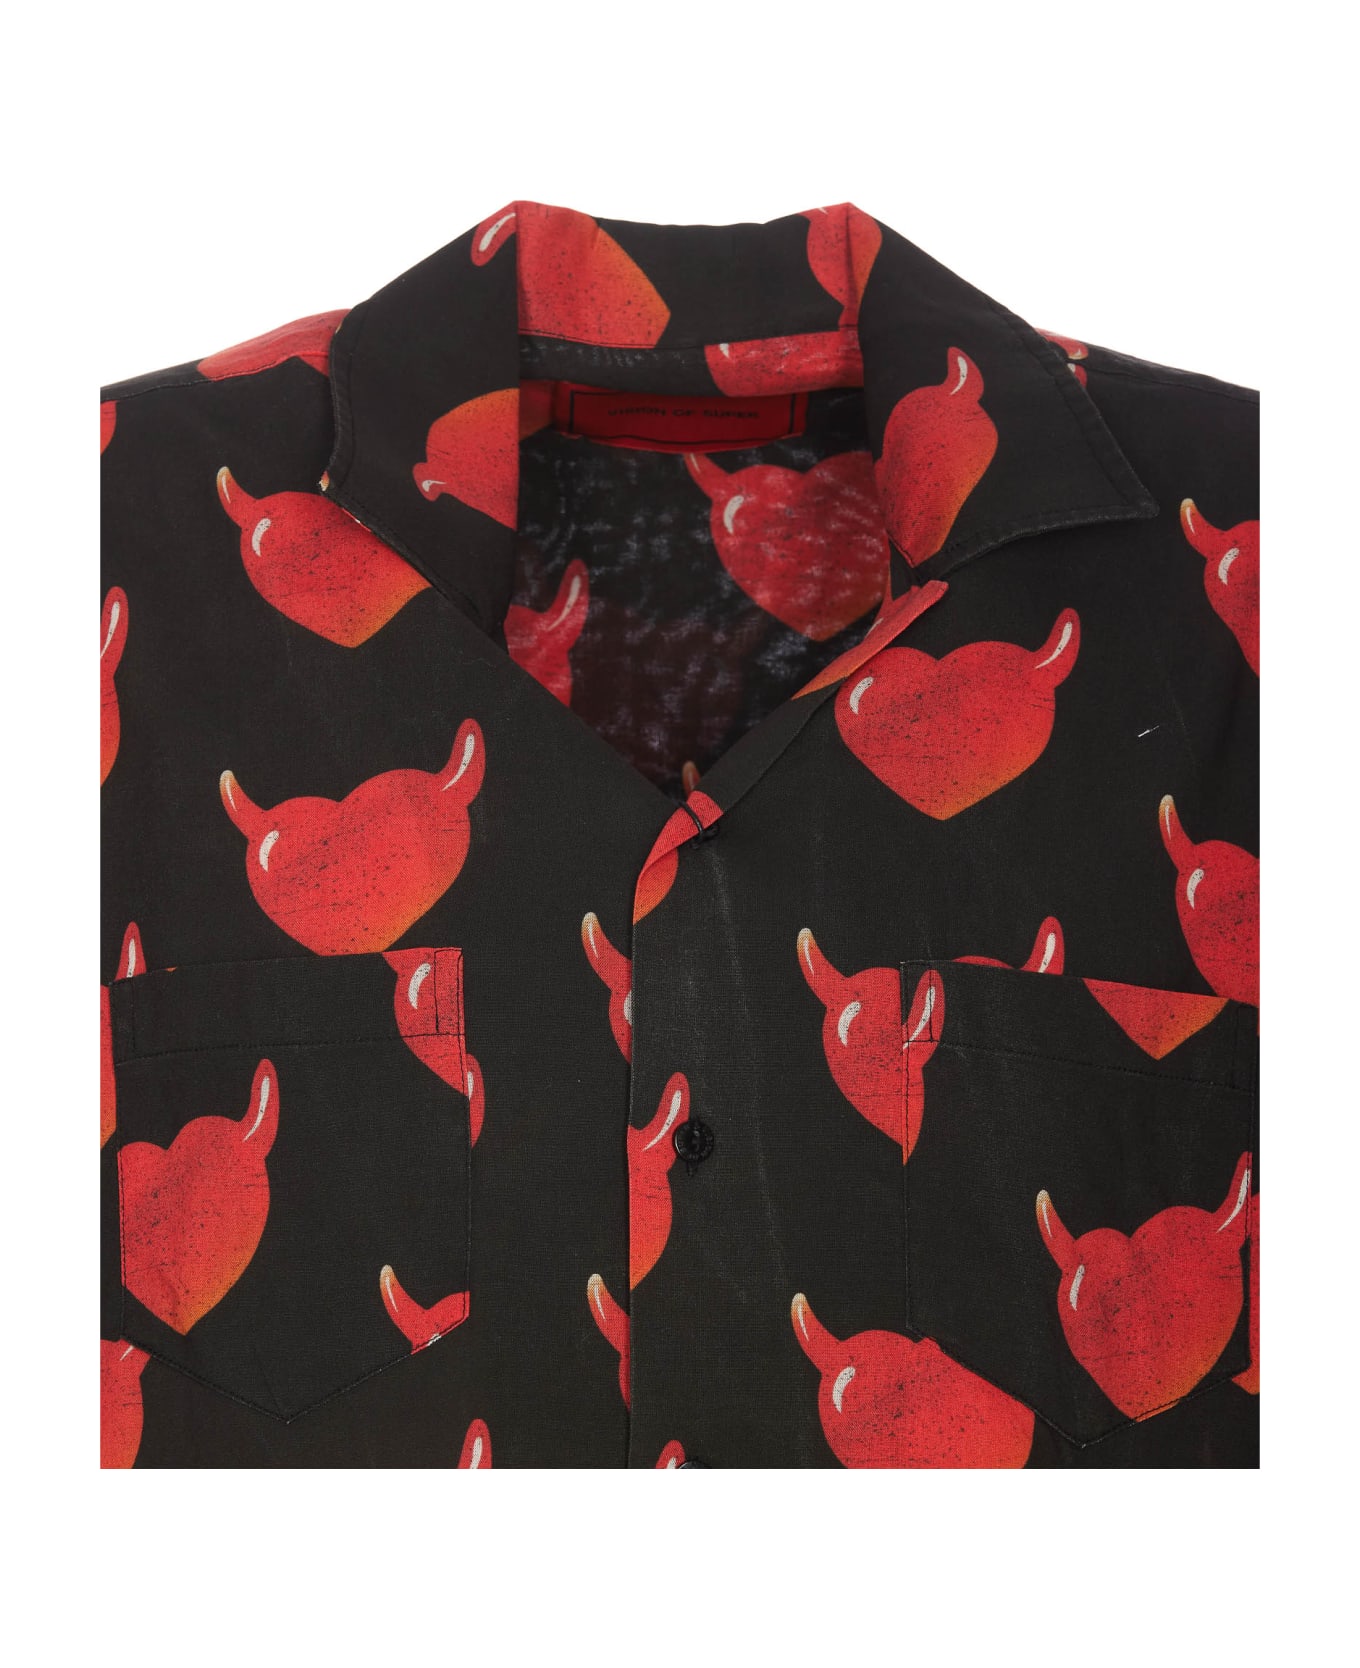 Vision of Super Vos Hearts Shirt - BLACK/RED シャツ